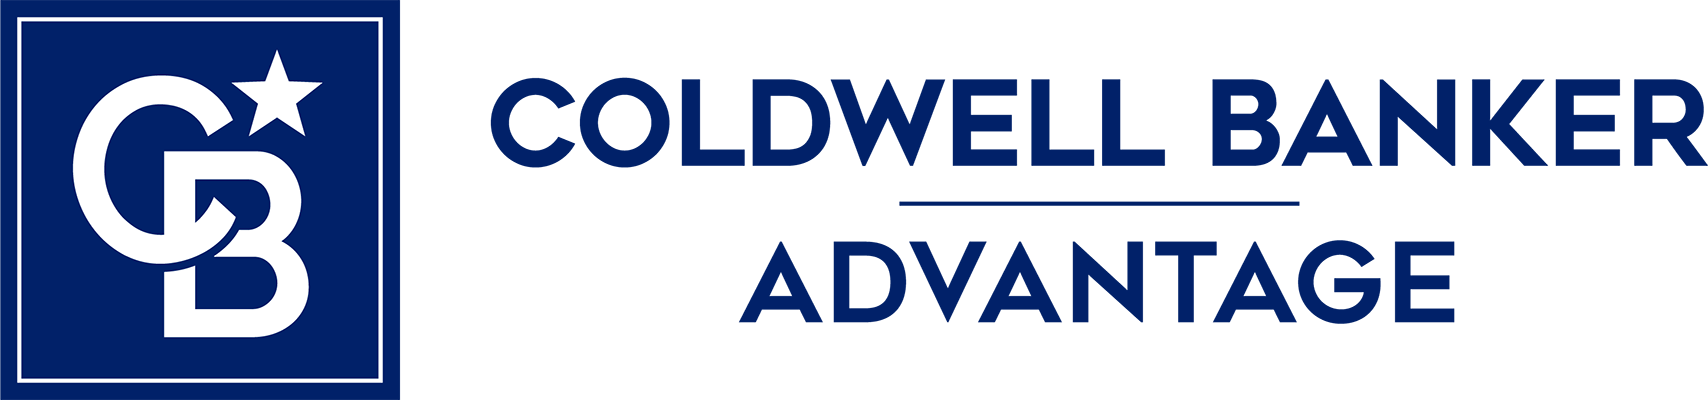 Cathy Lyons - Coldwell Banker Advantage Logo